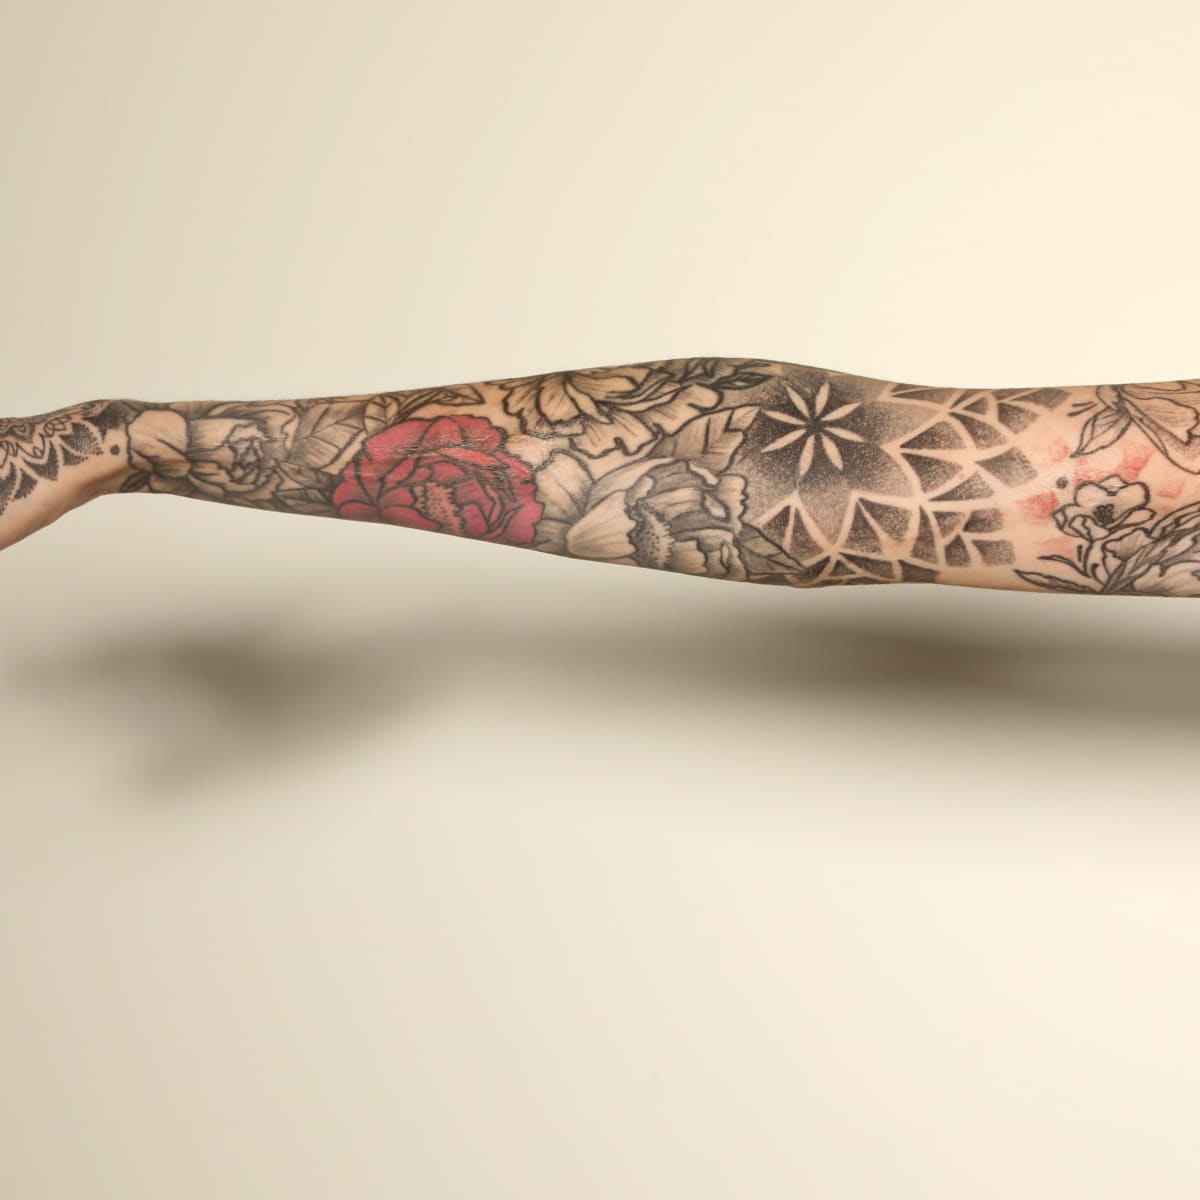 Una opción | Sleeve tattoos, Tattoos, Tattoo sleeve designs